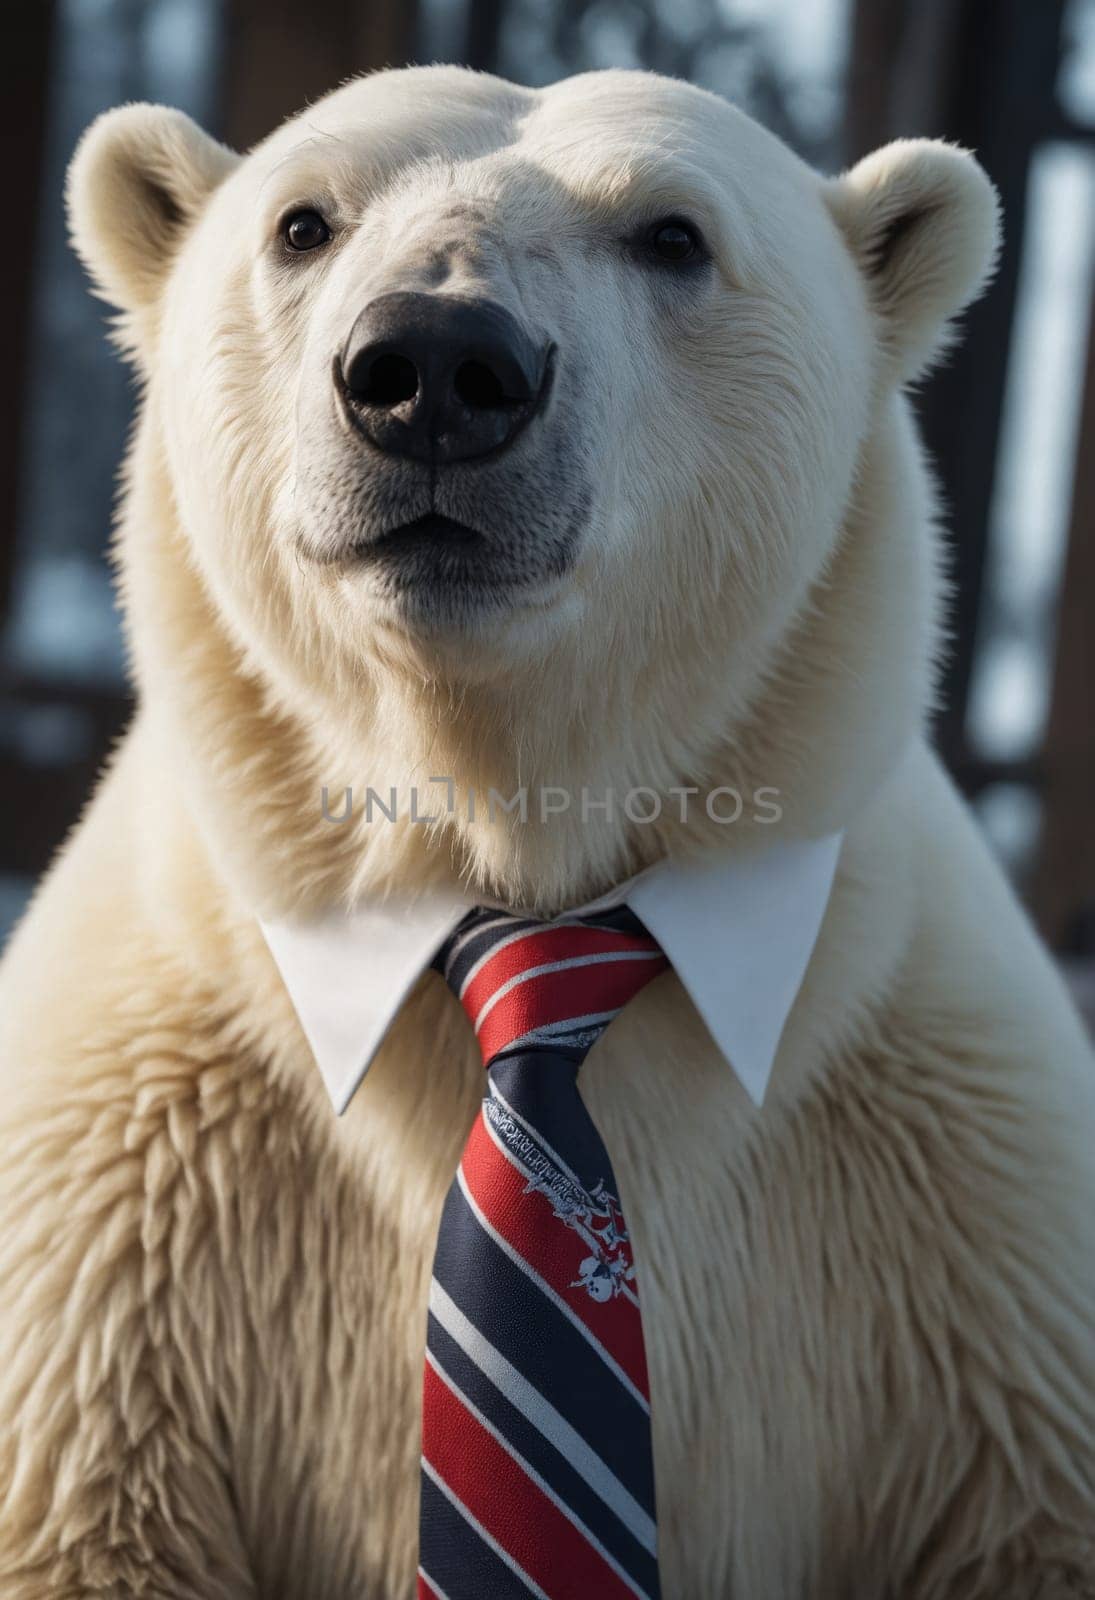 Urbanized Polar Bear: Elegant Attire on Wild Fur by Andre1ns